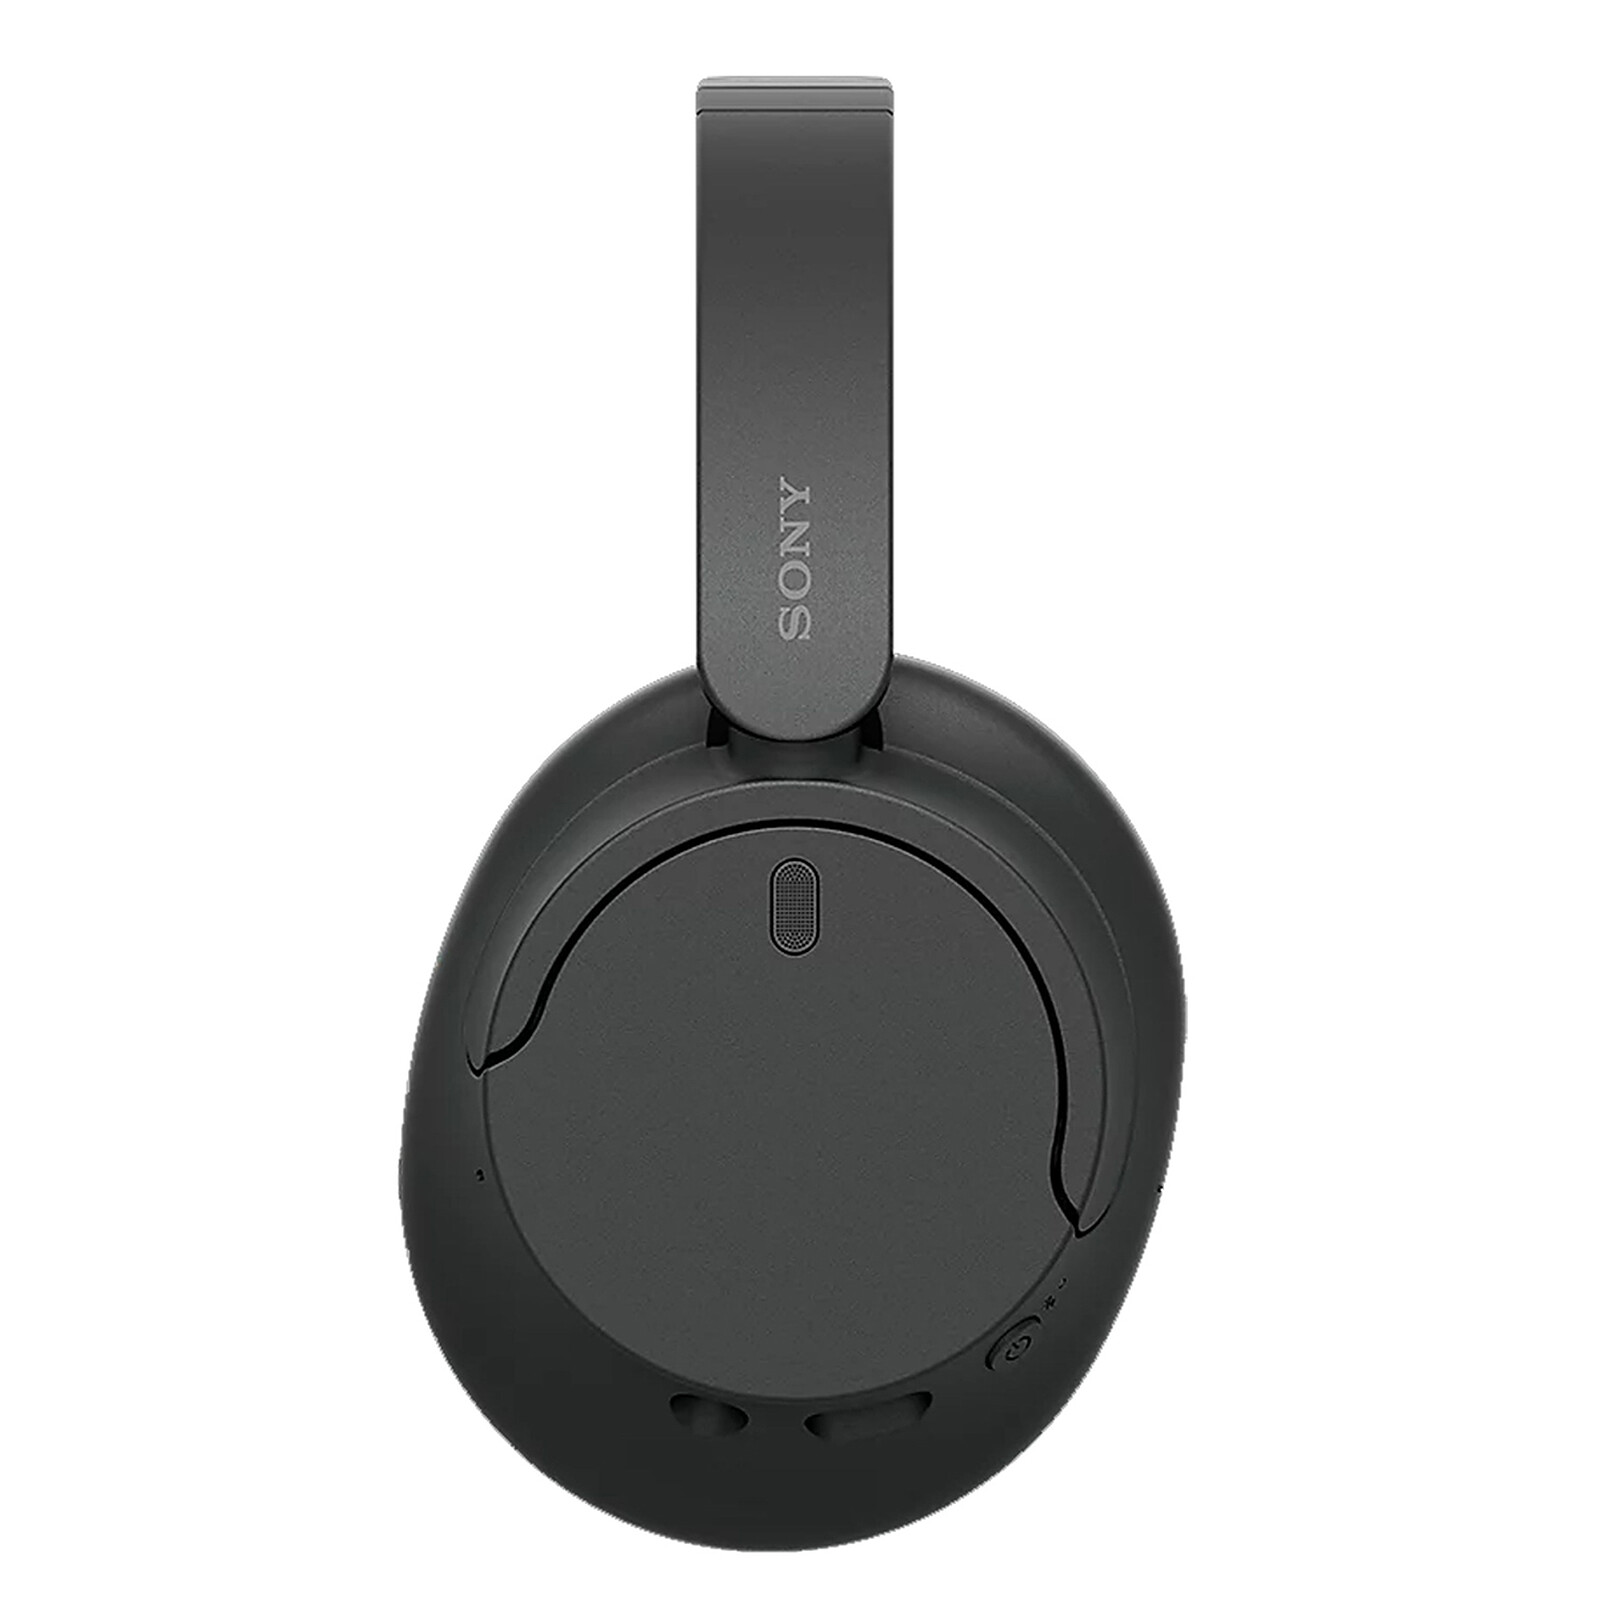 Apple AirPods Max vs Sony WH-1000XM4 : quel casque audio Bluetooth choisir ?